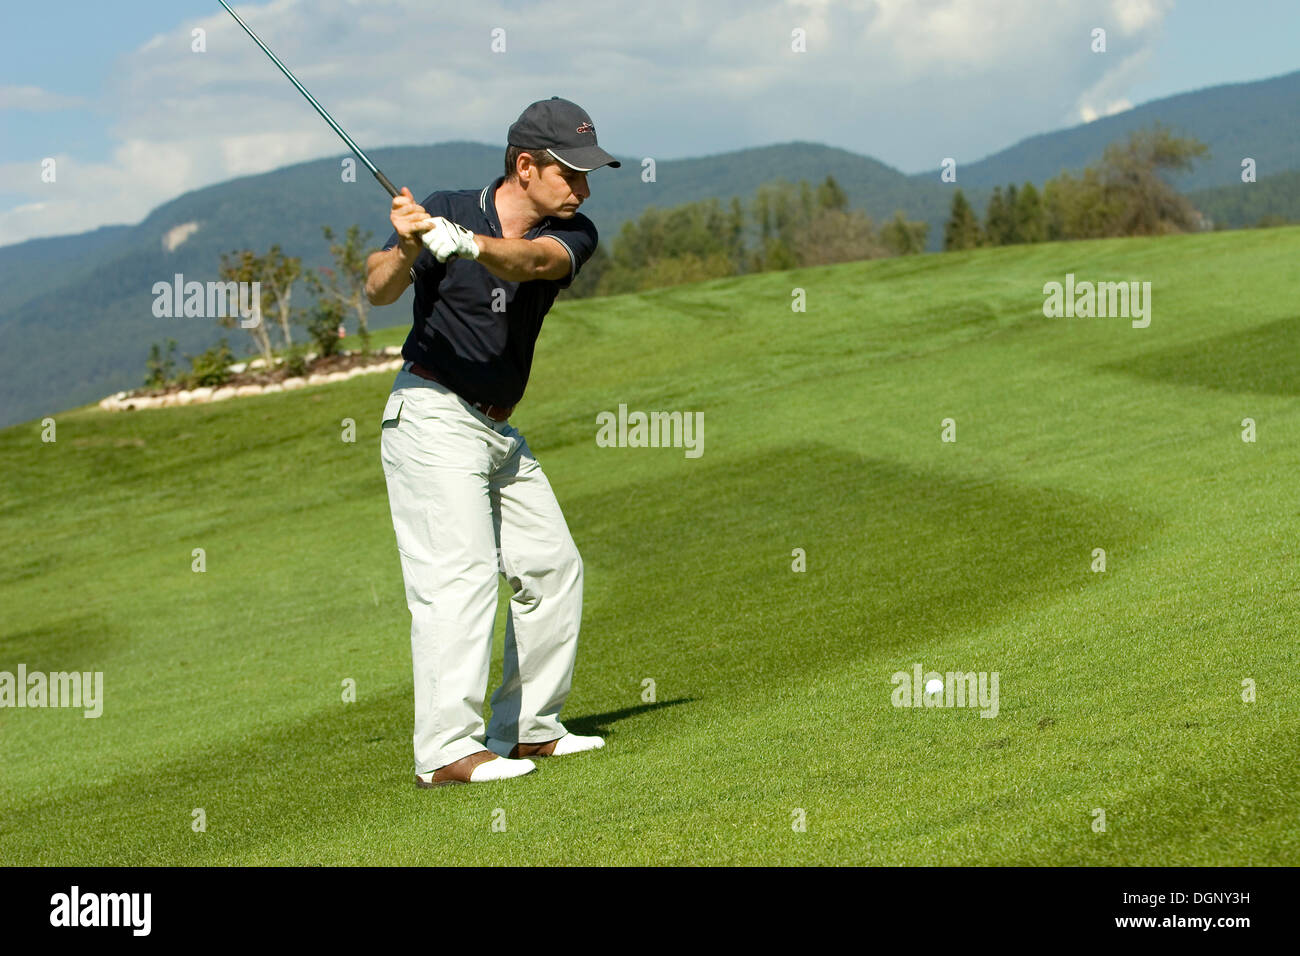 Campo de golf, golf player, Sarnonico, provincia de Trento, Italia, Europa Foto de stock